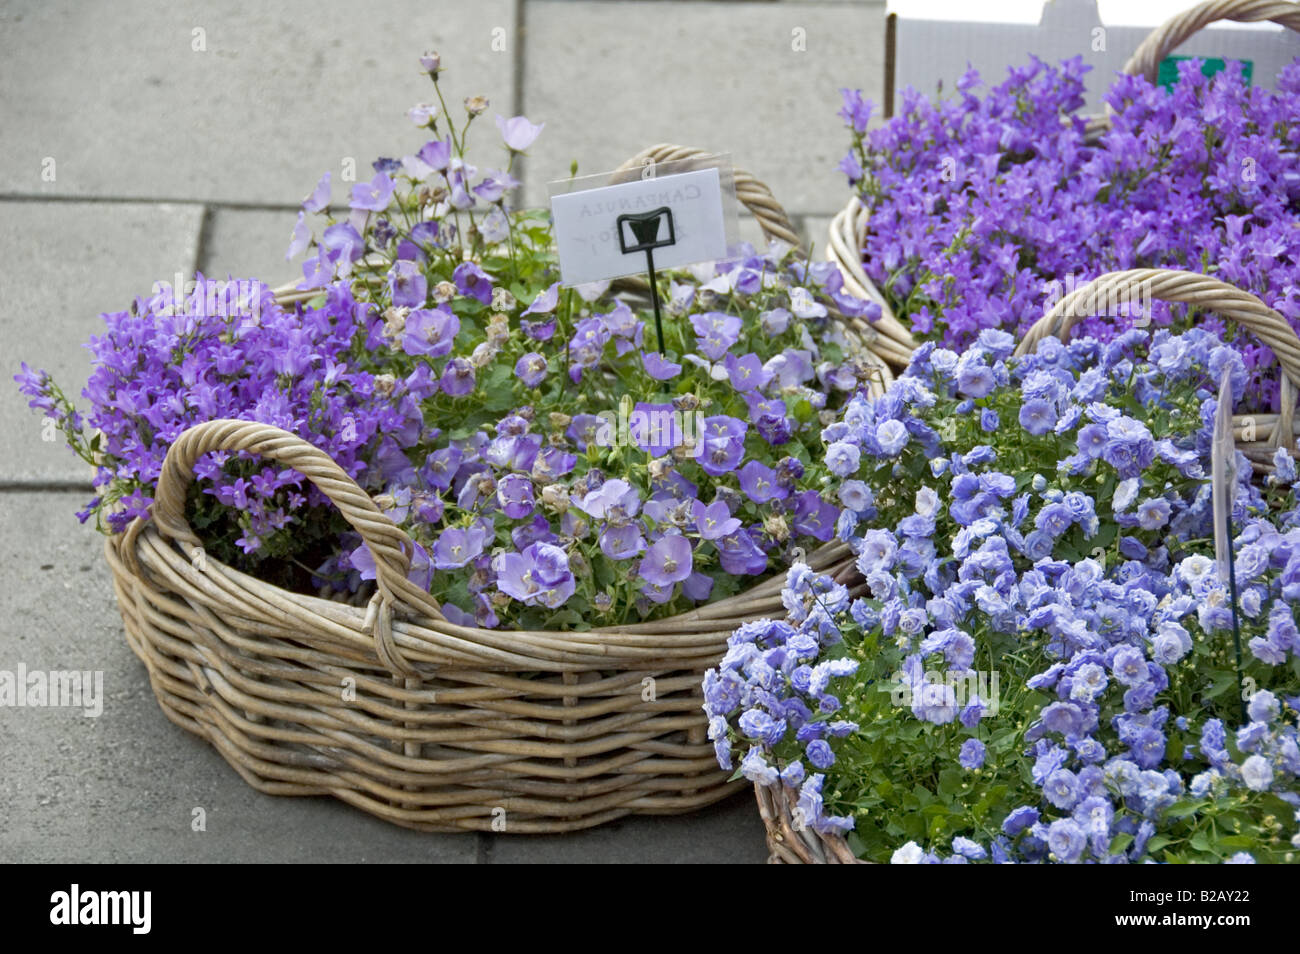 Street flowers Campanula for sale in baskets Islington London UK Stock Photo